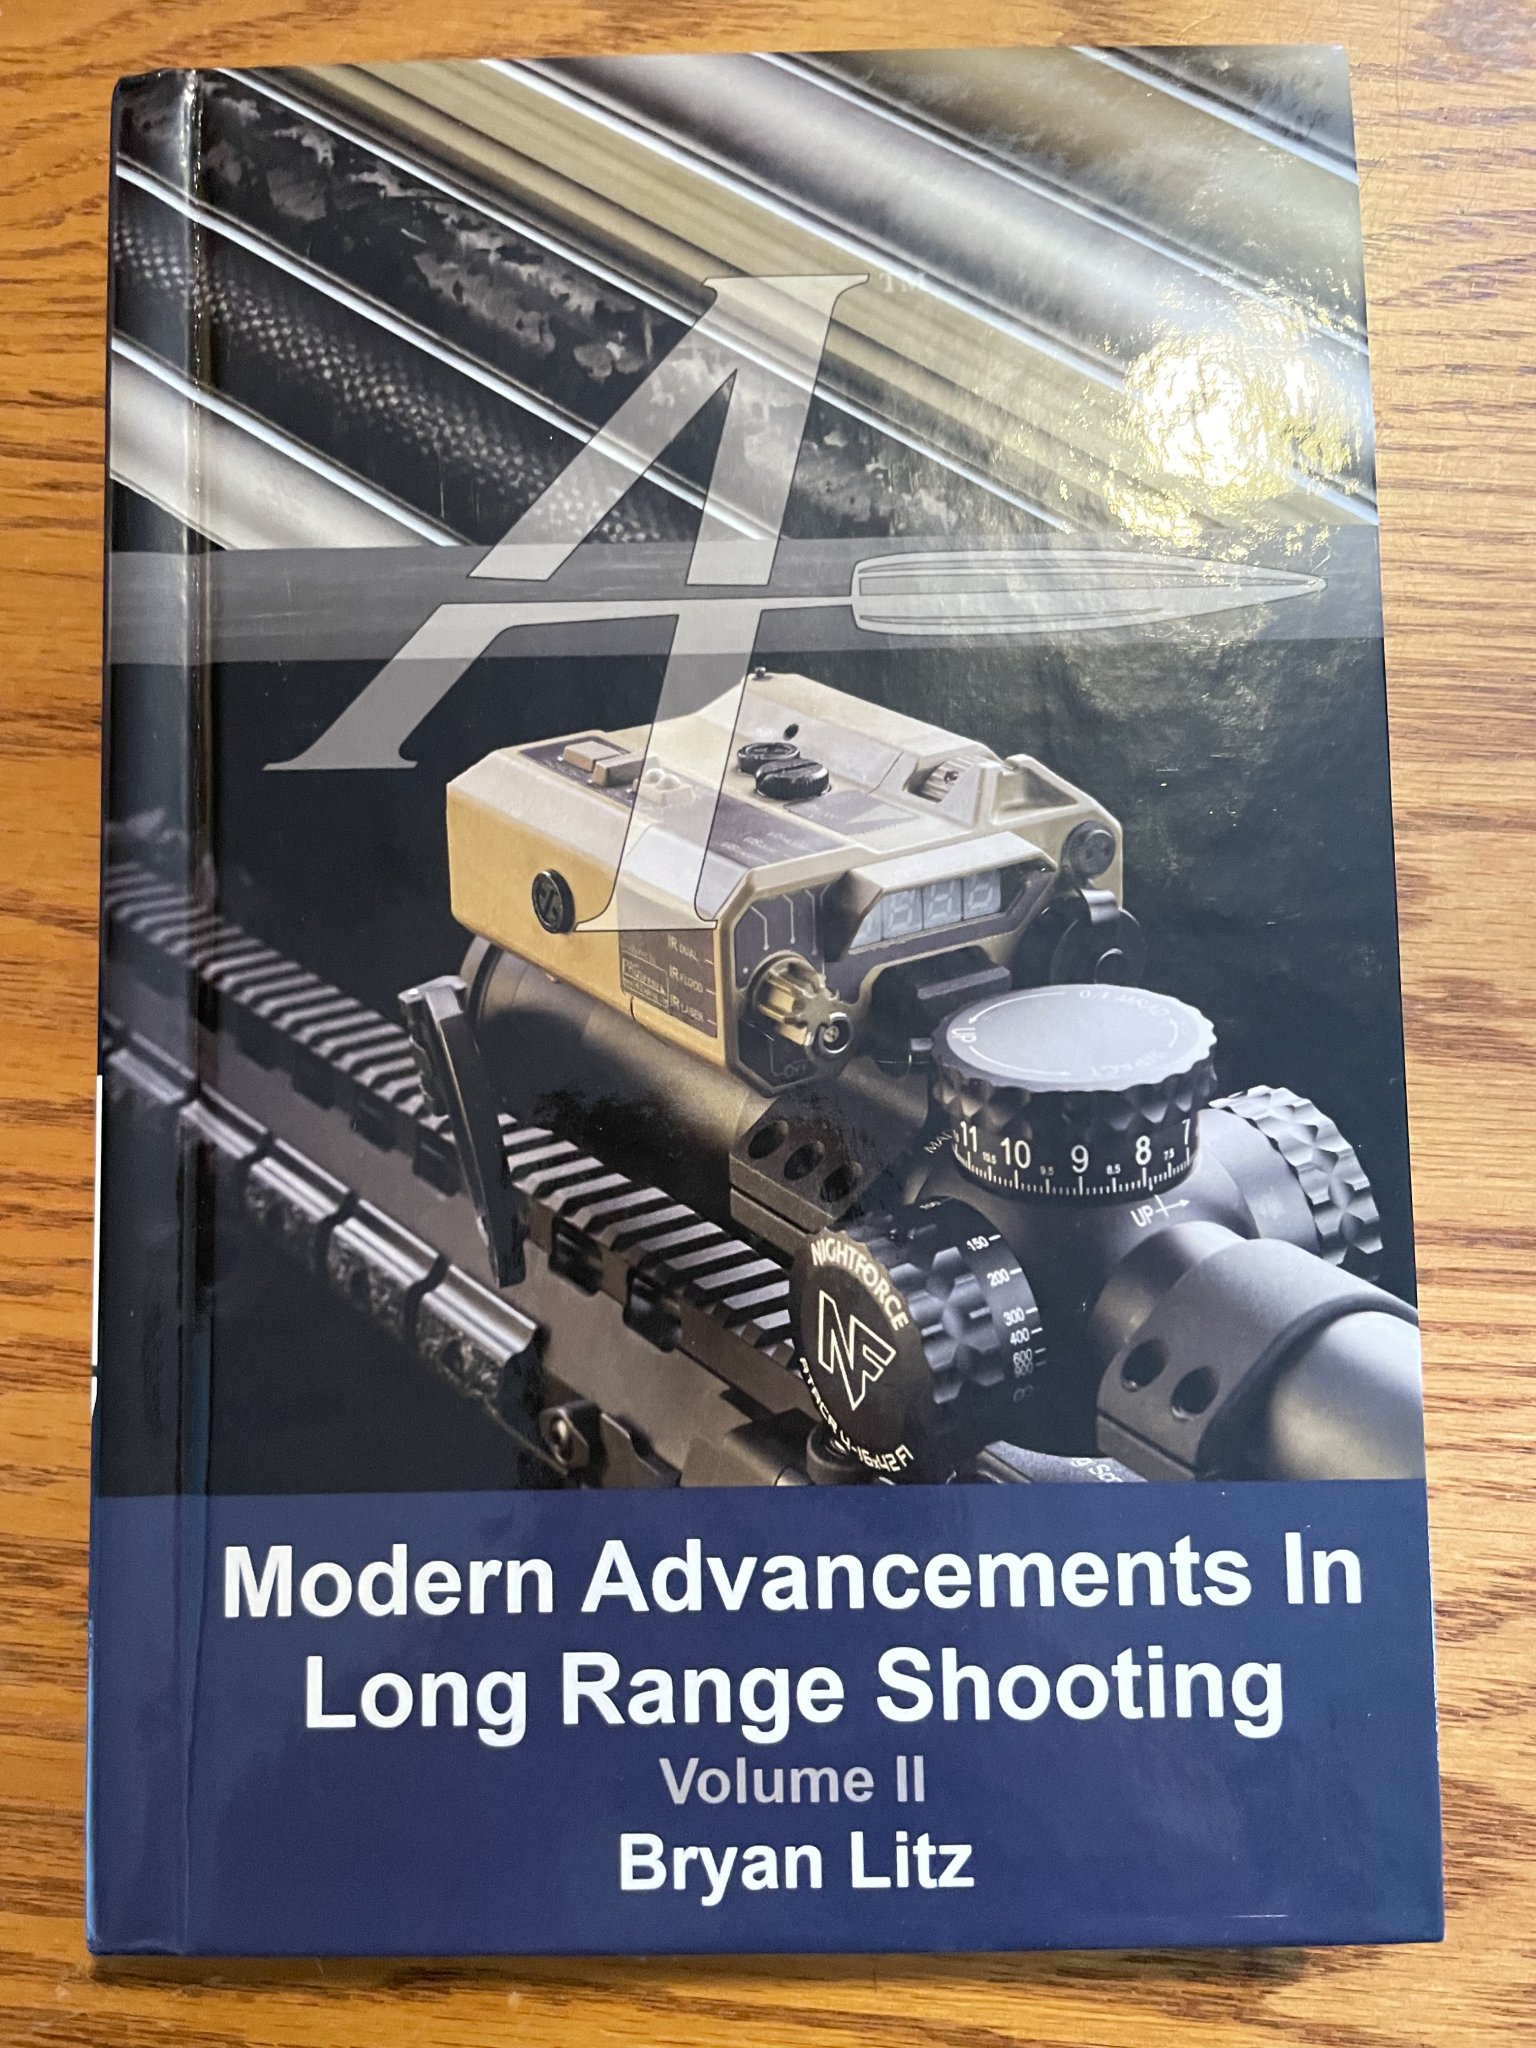 Applied Ballistics For Long Range Shooting 3rd Edition - The